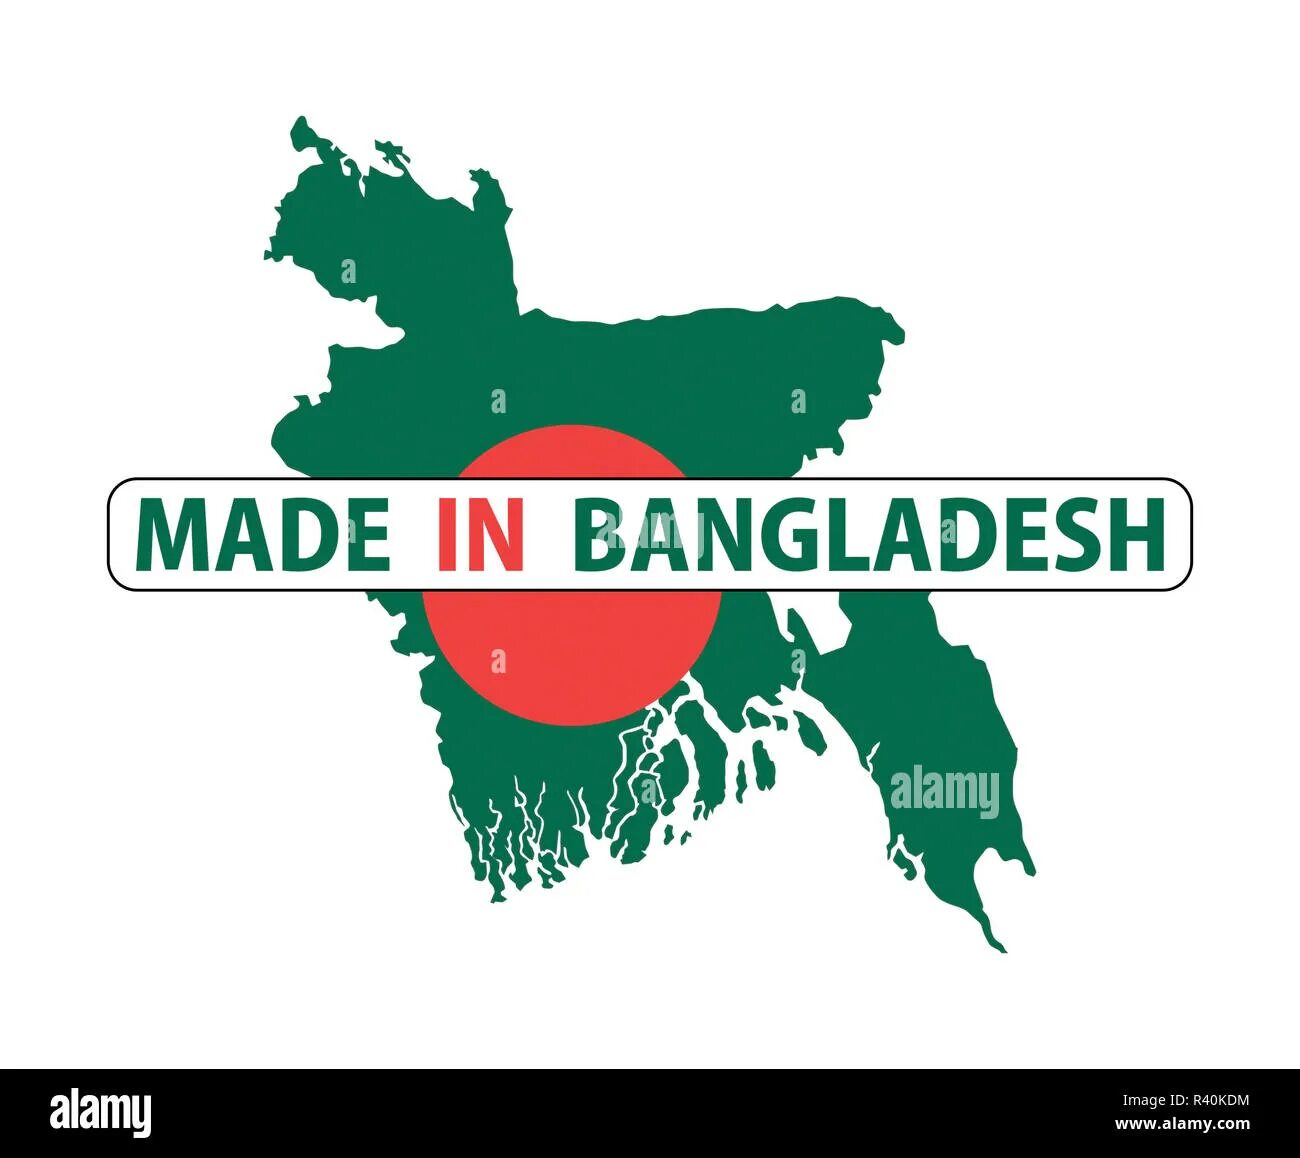 Made in bangladesh. Made in Bangladesh Страна. Vilet made in Bangladesh. Made in Bangladesh kort.